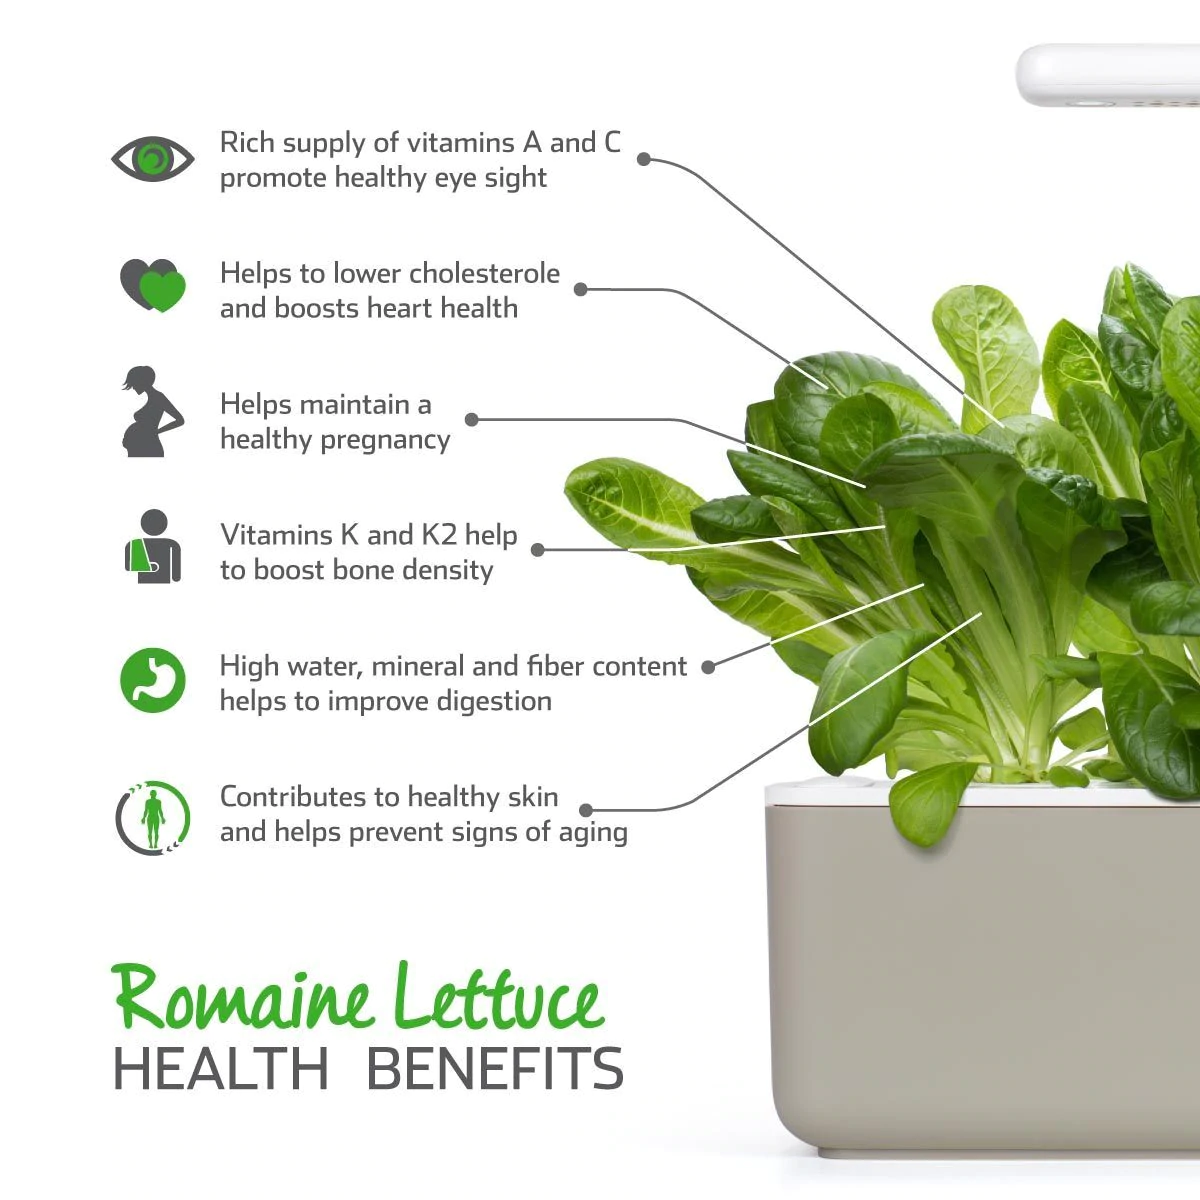 Click & Grow Romaine Lettuce plant pods